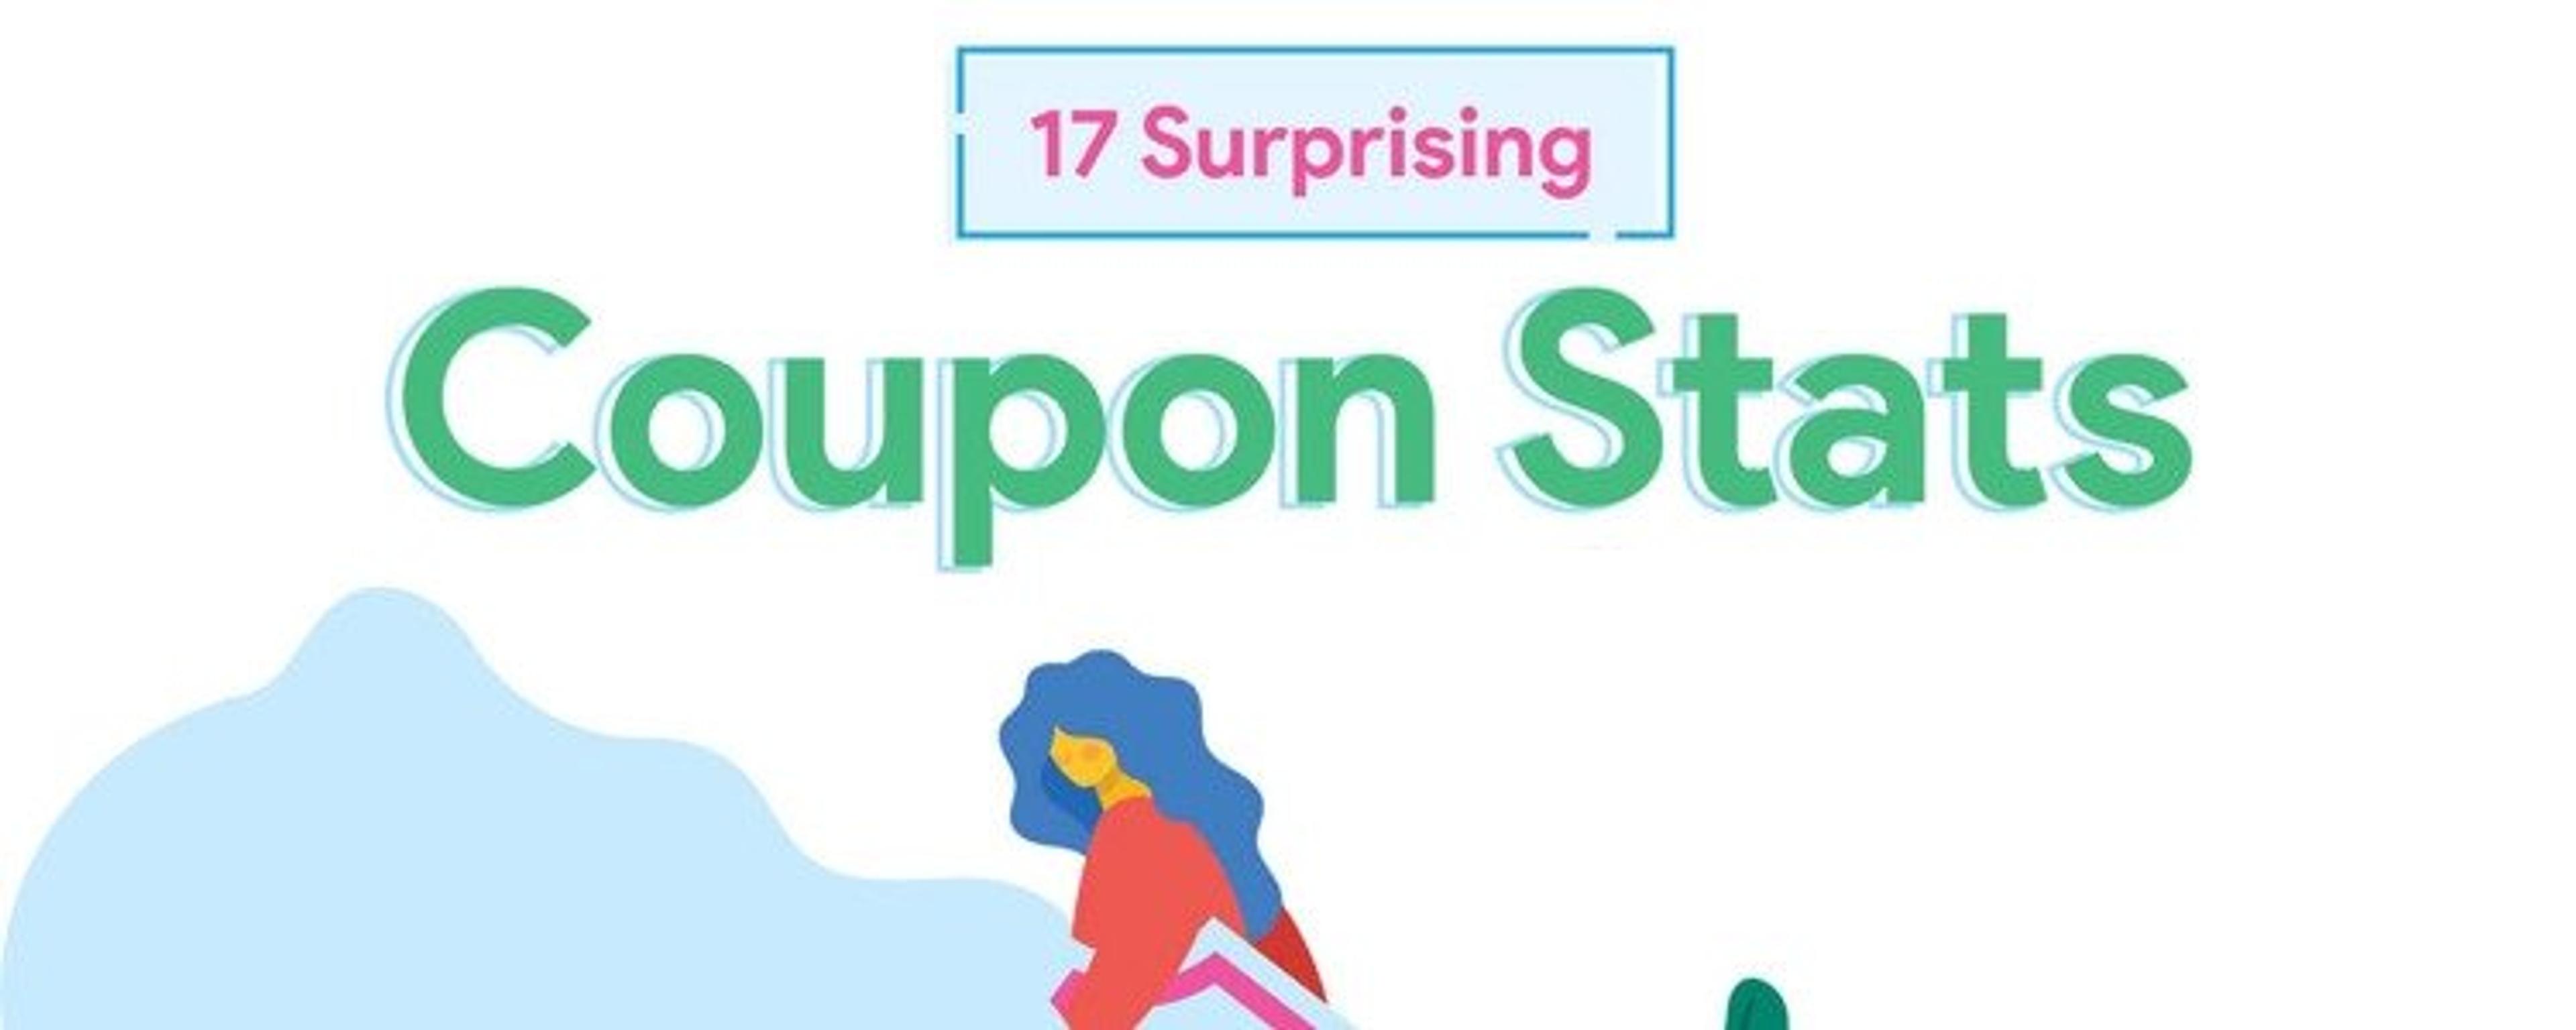 17 Surprising Coupon Statistics & Trends